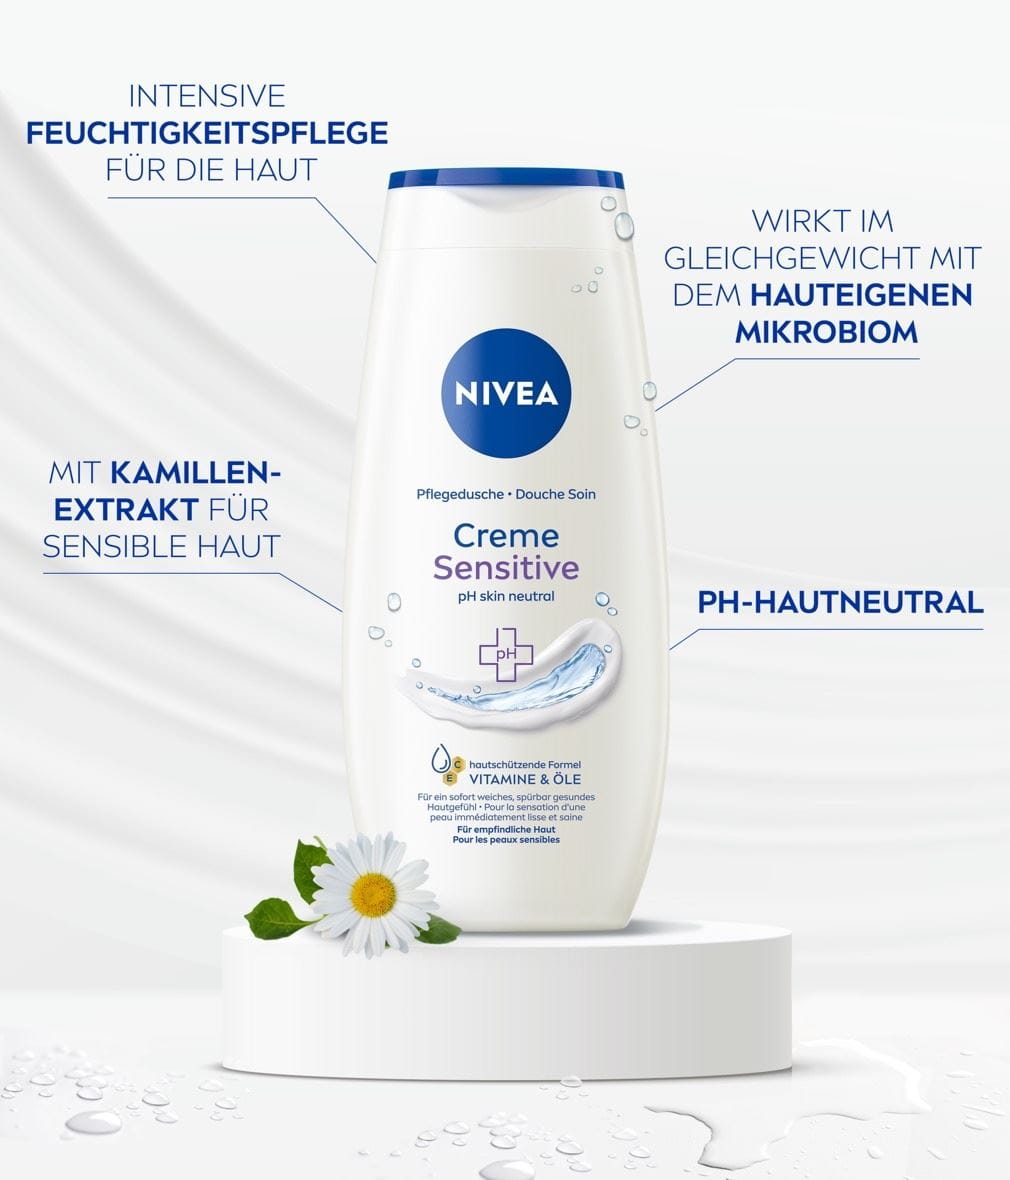 NIVEA Pflegedusche Creme Sensitive ph-Neutral Produktabbildung mit Benefits